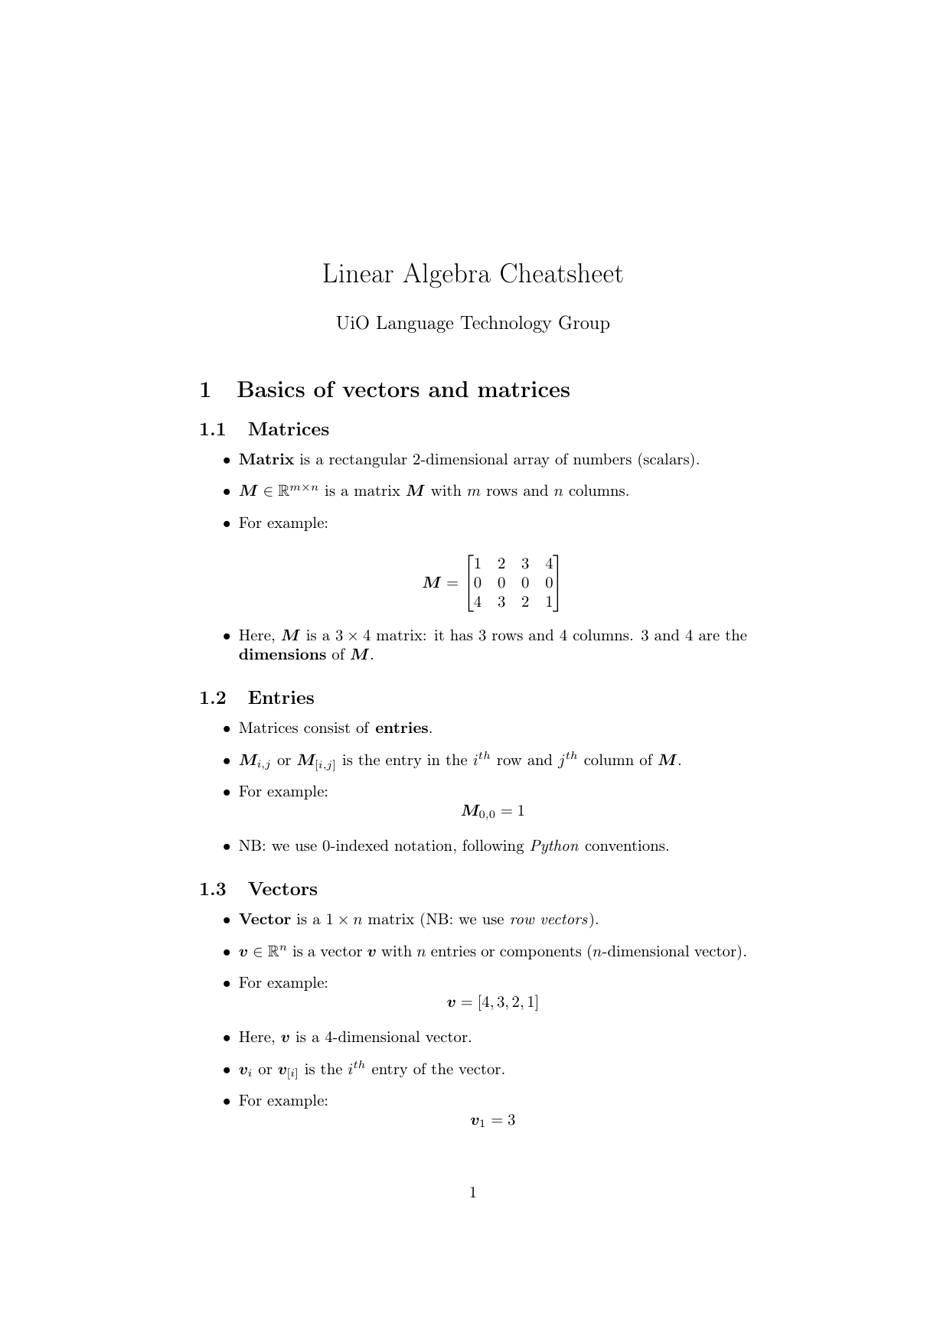 Linear Algebra Cheatsheet - Uio Language Technology Group